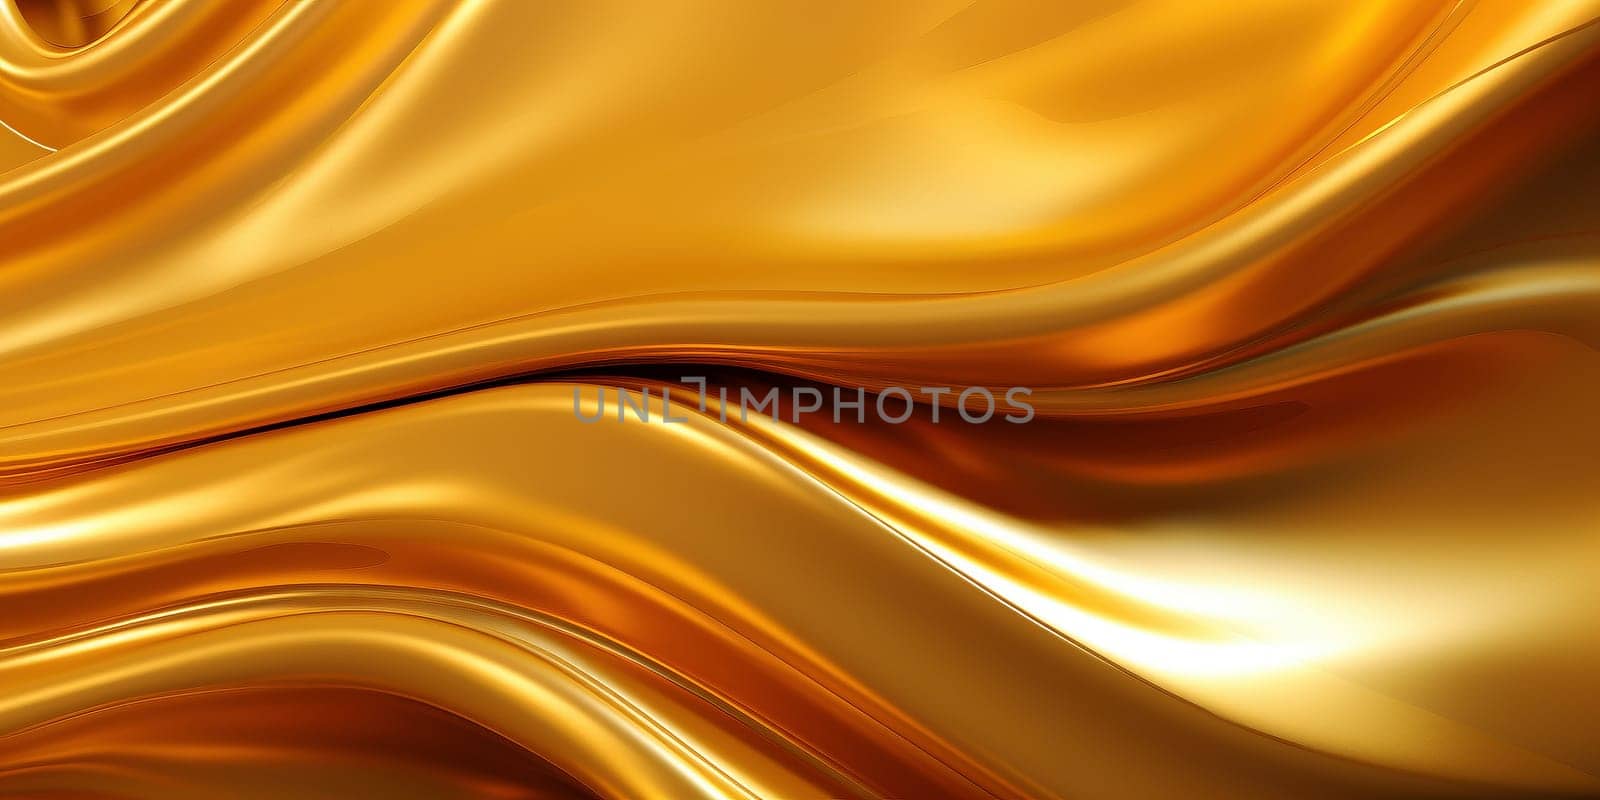 Golden fluid background. Liquid yellow metal wallpaper. Glamour swirl gold texture. 3d wavy flow abstraction